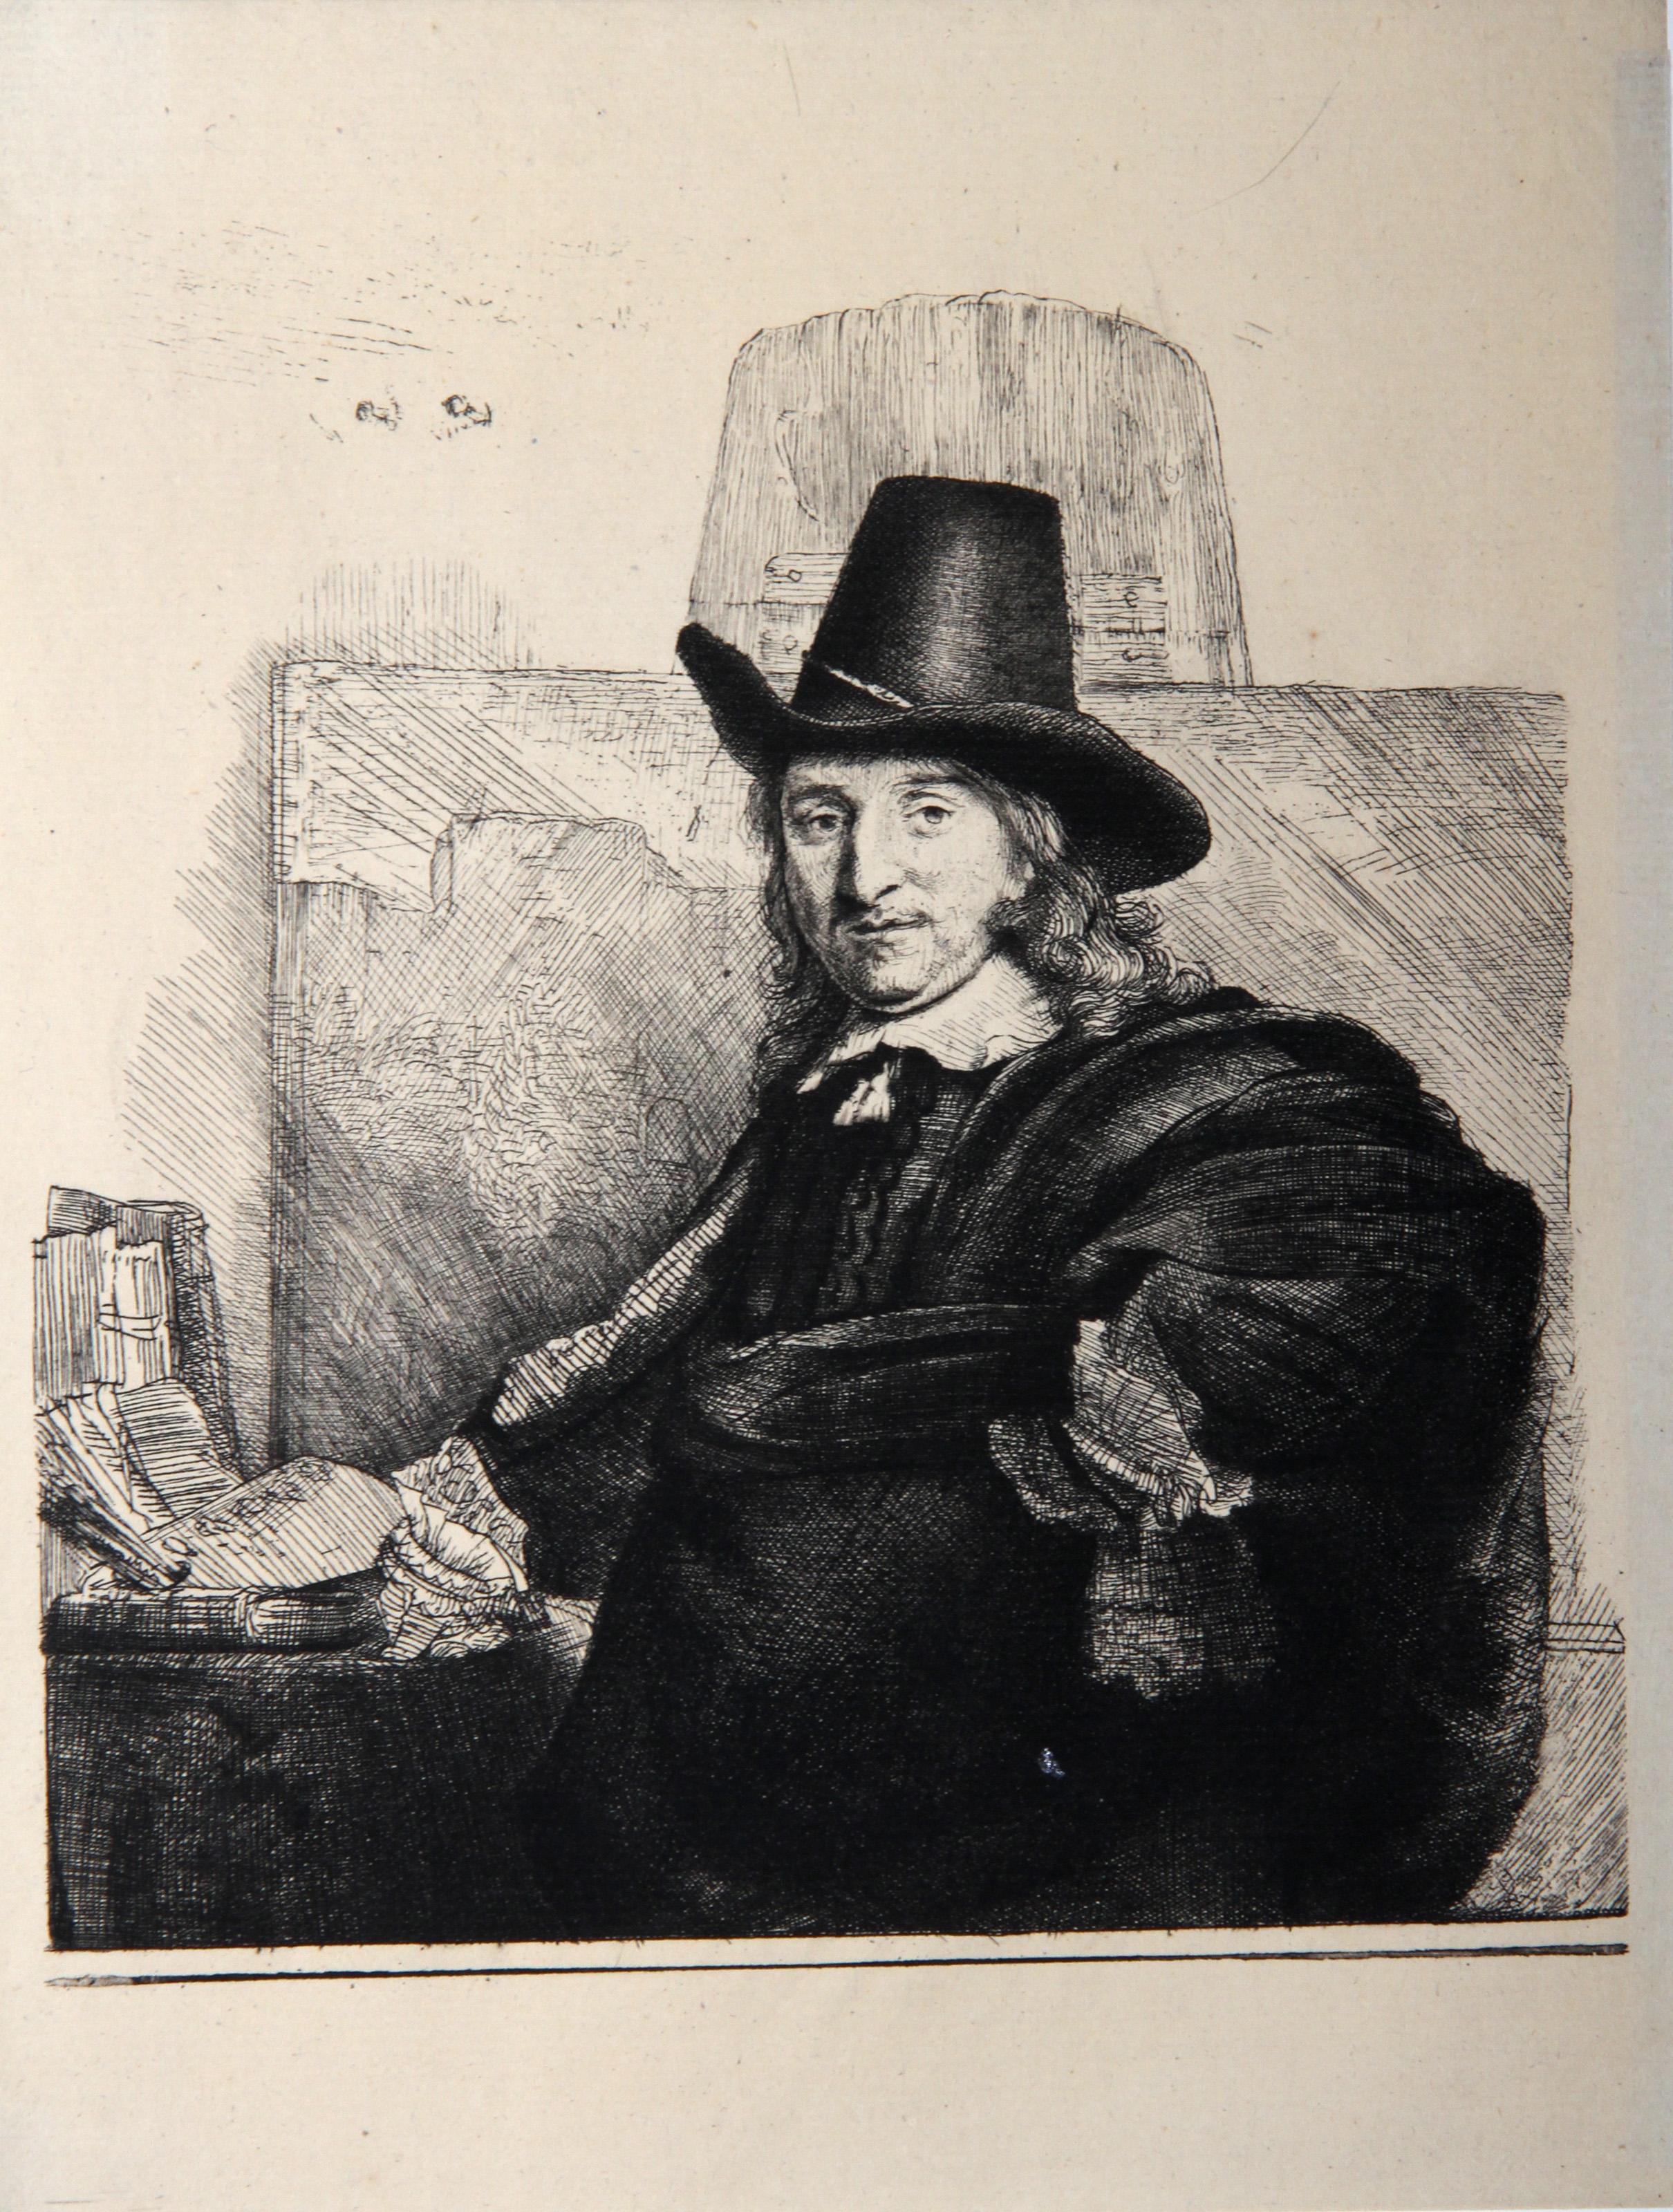 Rembrandt van Rijn, After by Amand Durand, Dutch (1606 - 1669) -  Portrait de Jean Asselyn (B277). Year: 1878 (of original 1647), Medium: Heliogravure, Size: 8.5  x 7 in. (21.59  x 17.78 cm), Printer: Amand Durand, Description: French Engraver and